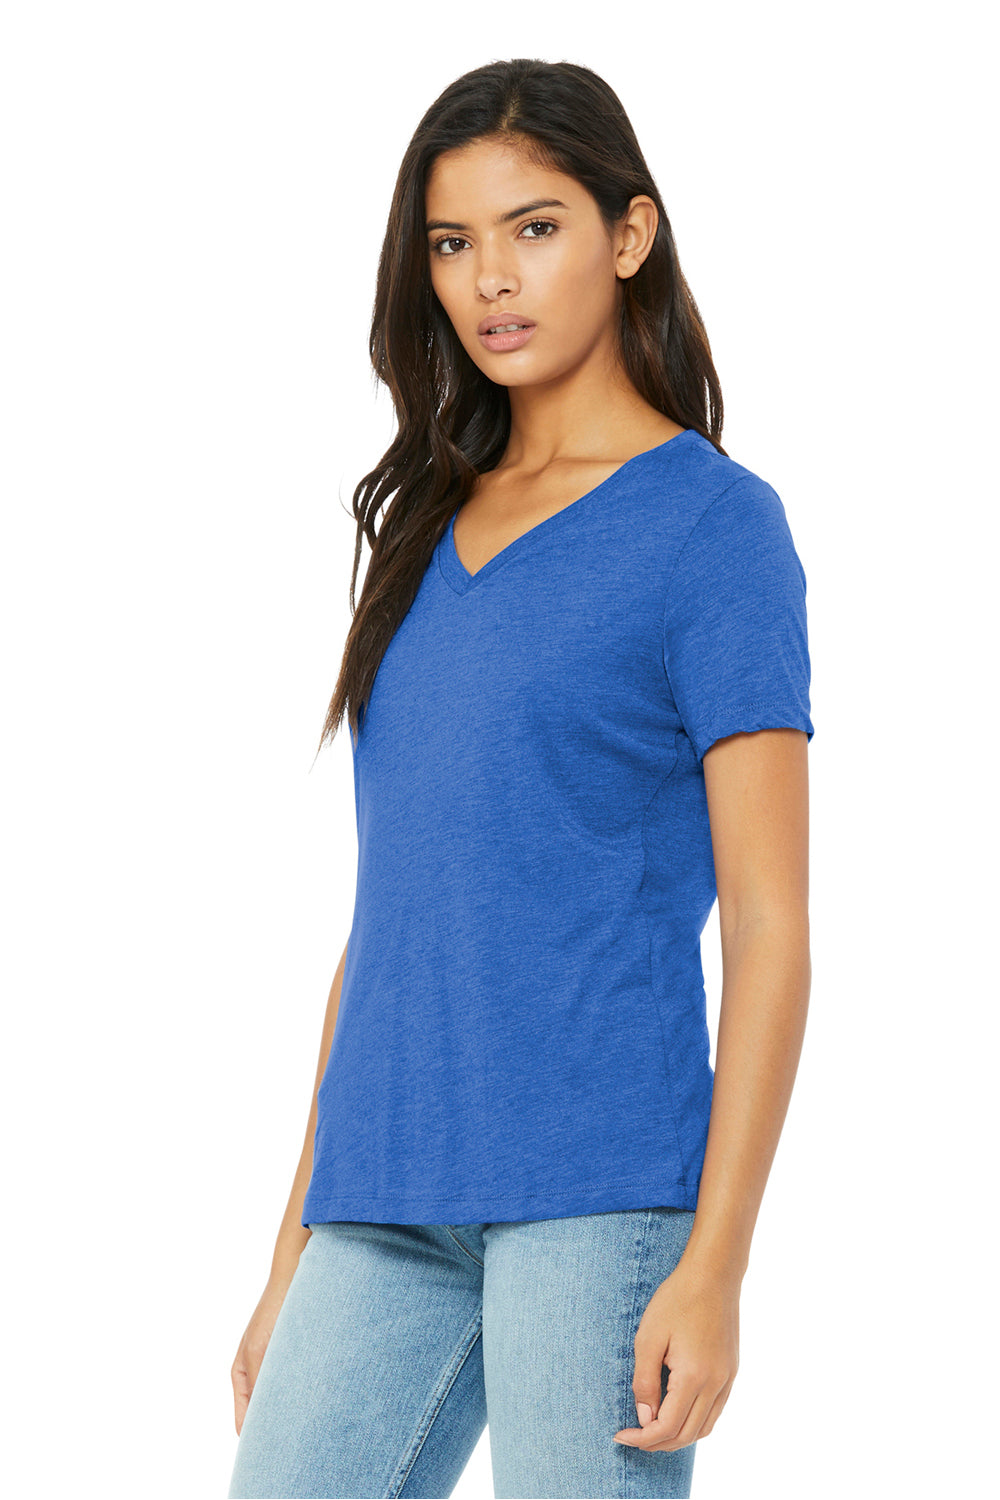 Bella + Canvas BC6415 Womens Short Sleeve V-Neck T-Shirt True Royal Blue Model 3Q